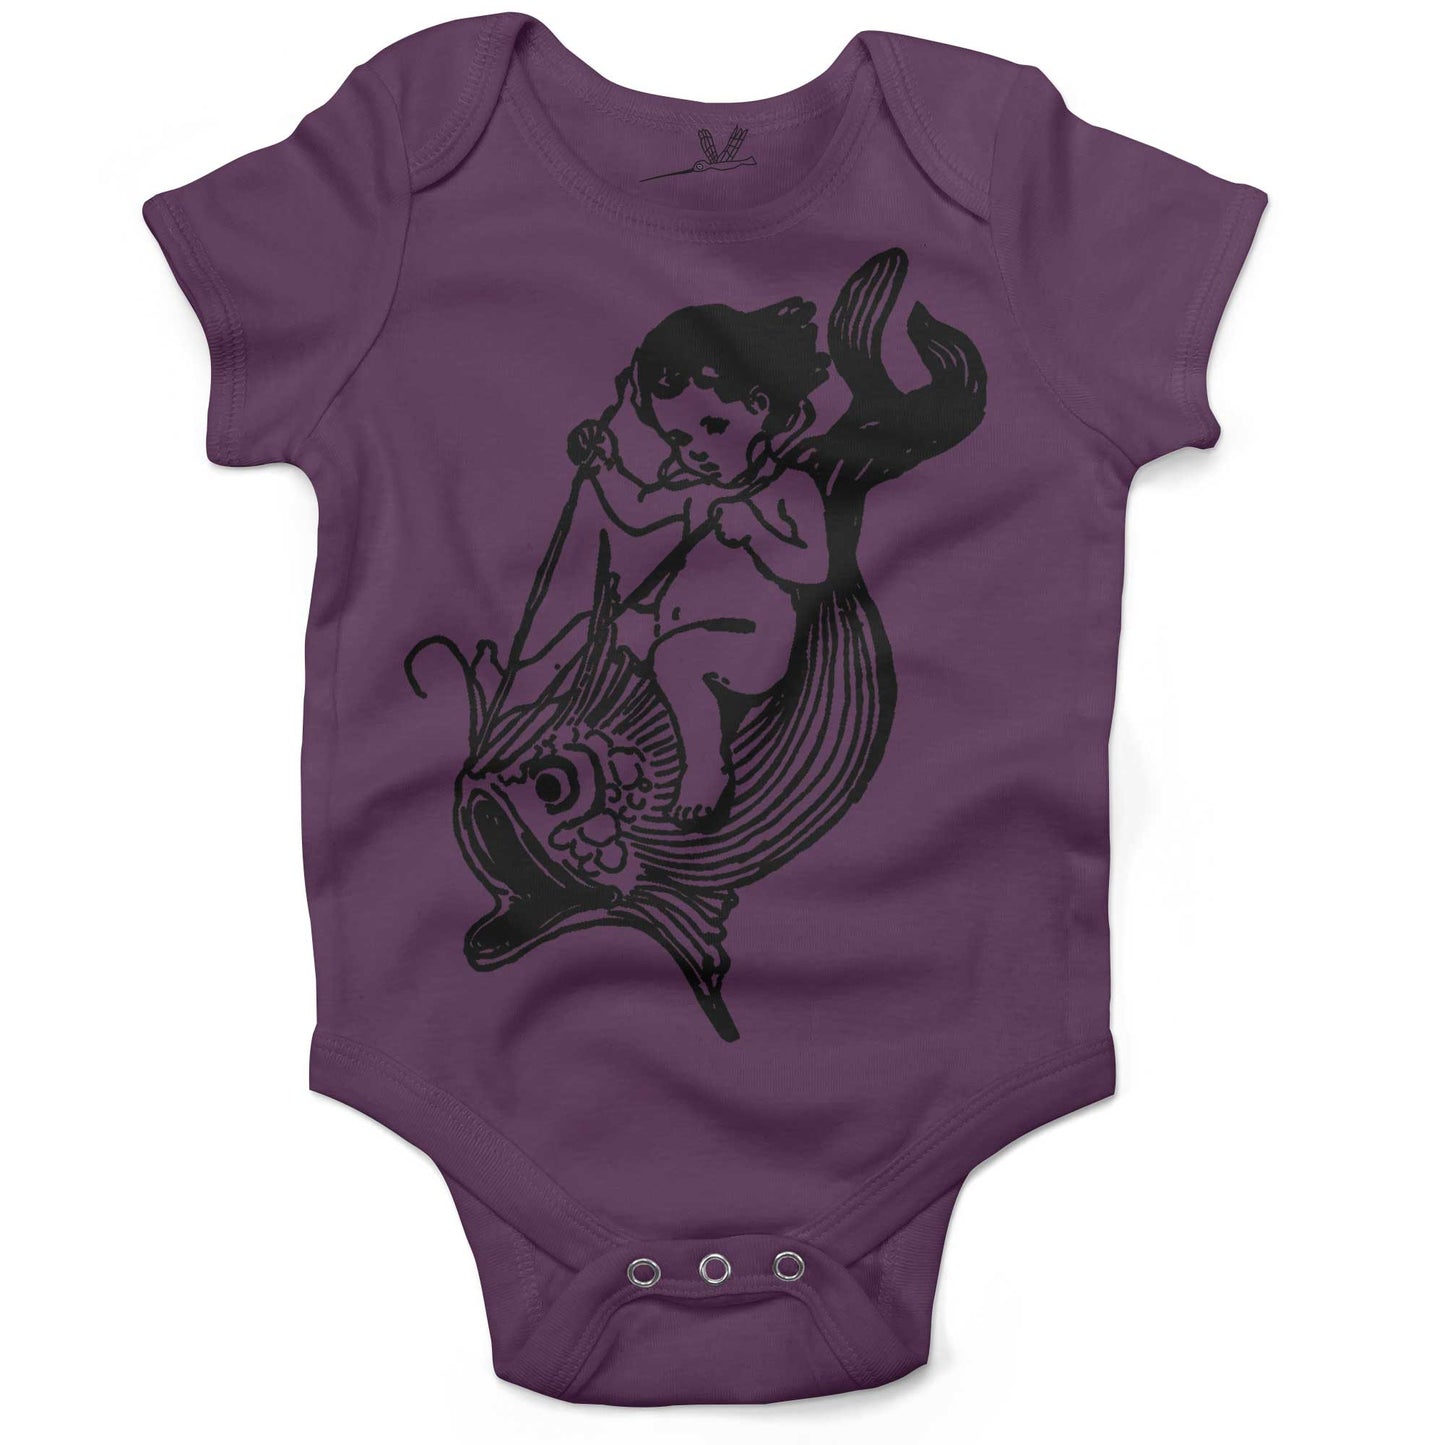 Water Baby Riding A Giant Fish Infant Bodysuit or Raglan Tee-Organic Purple-3-6 months